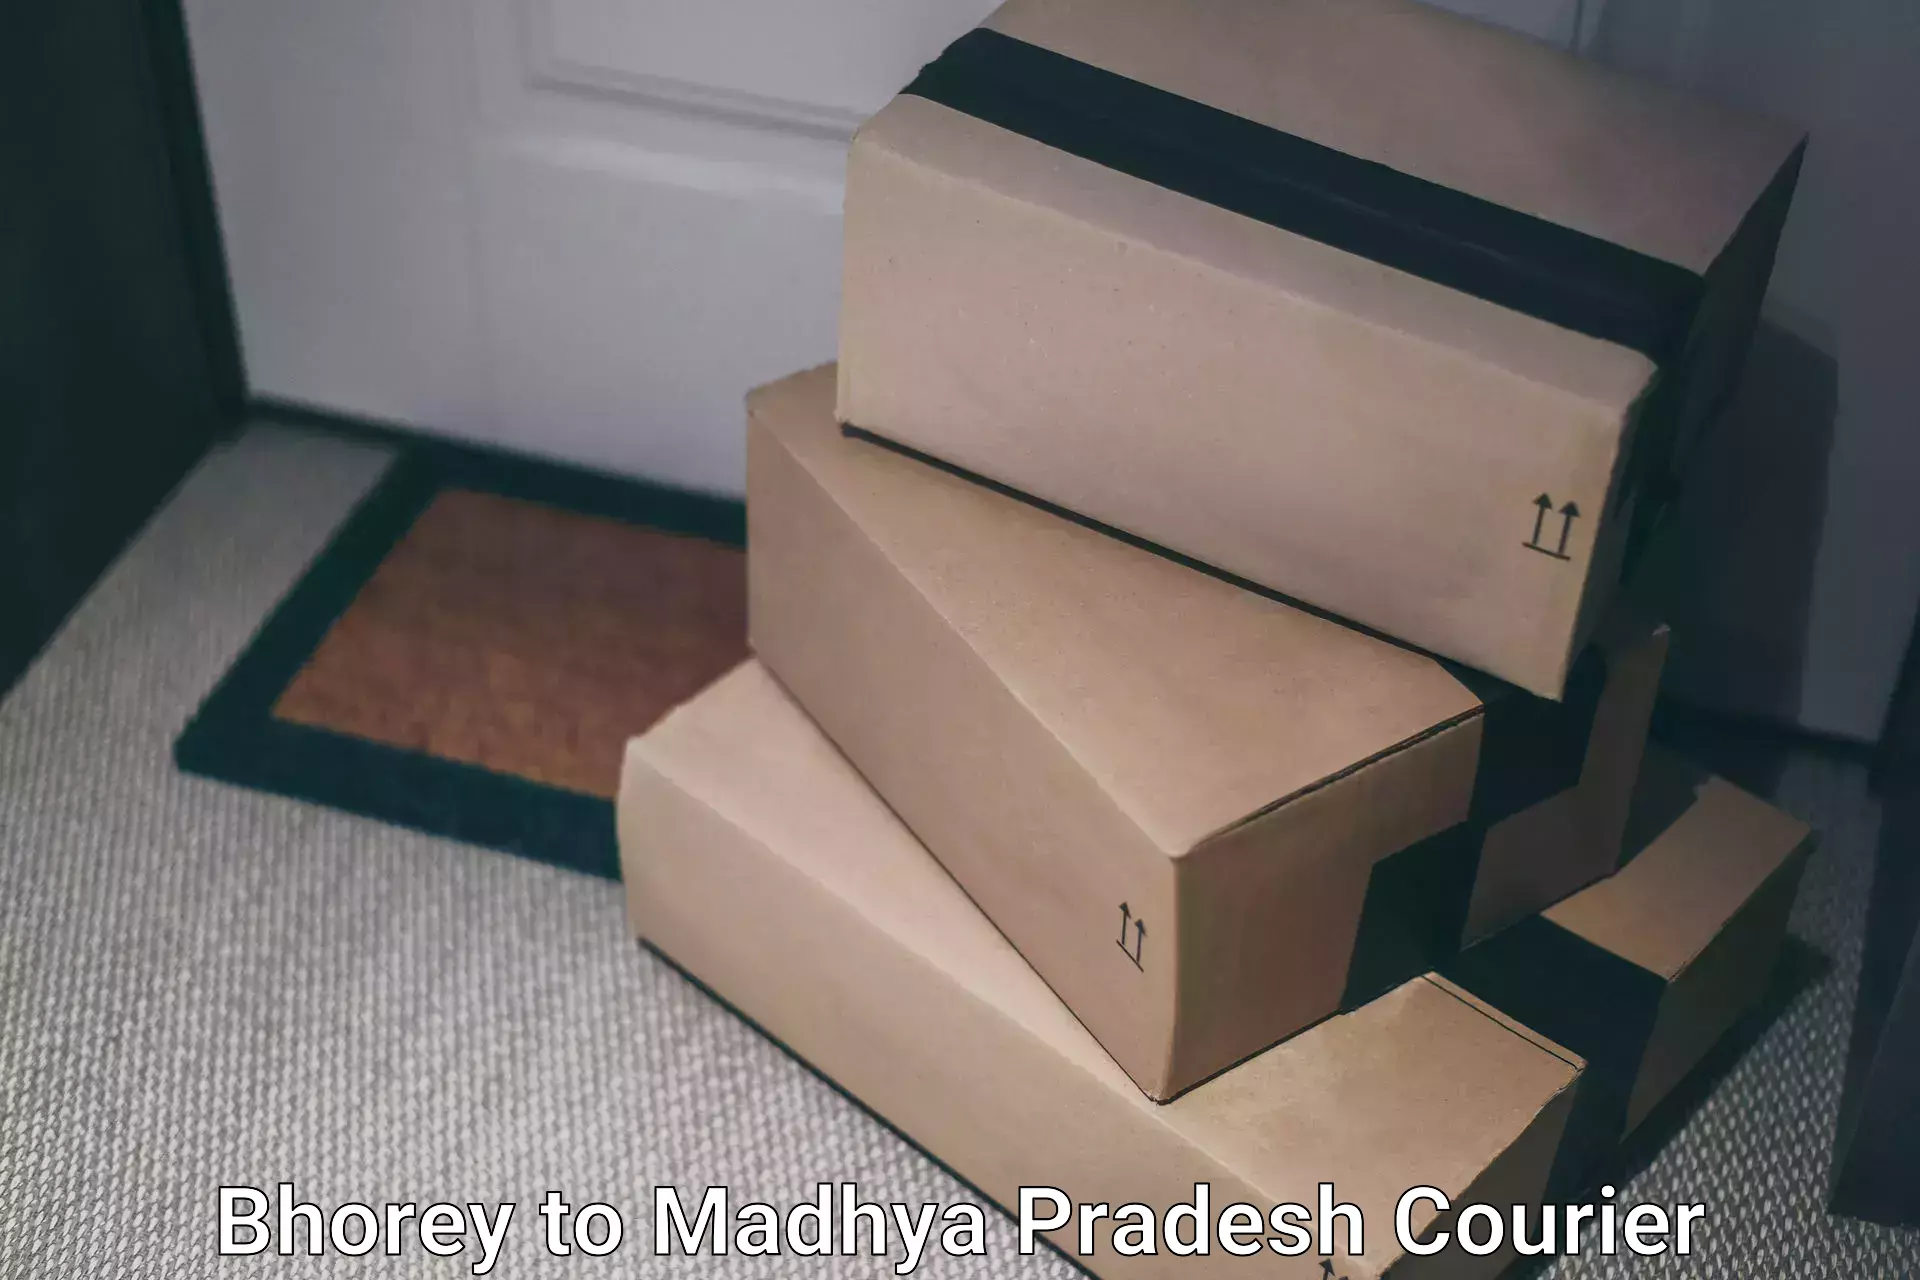 24-hour courier service in Bhorey to Vidisha